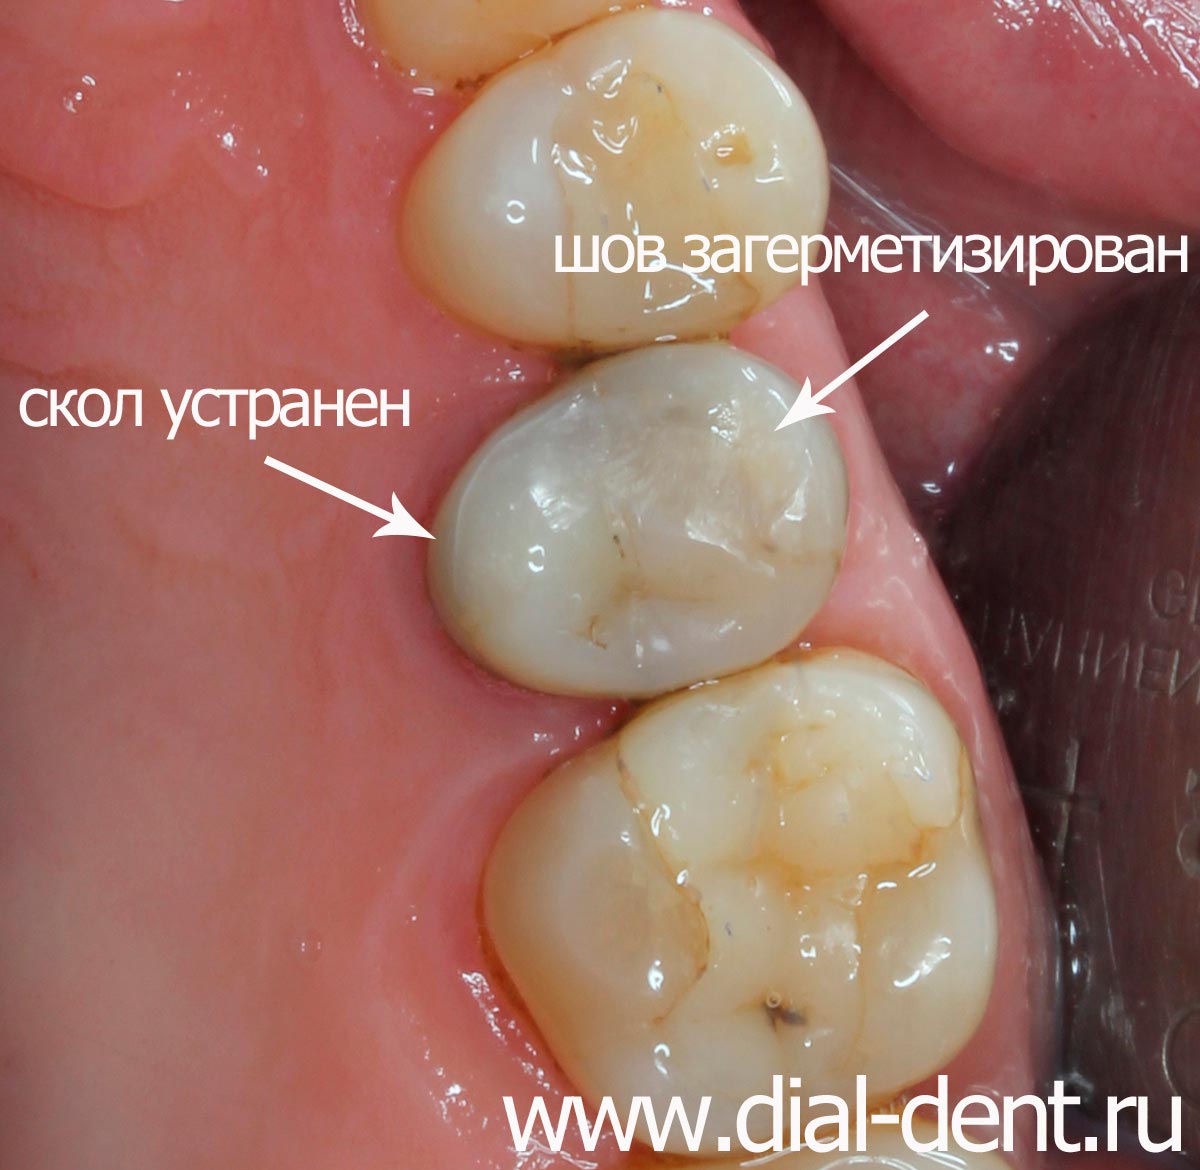 результат восстановления скола зуба